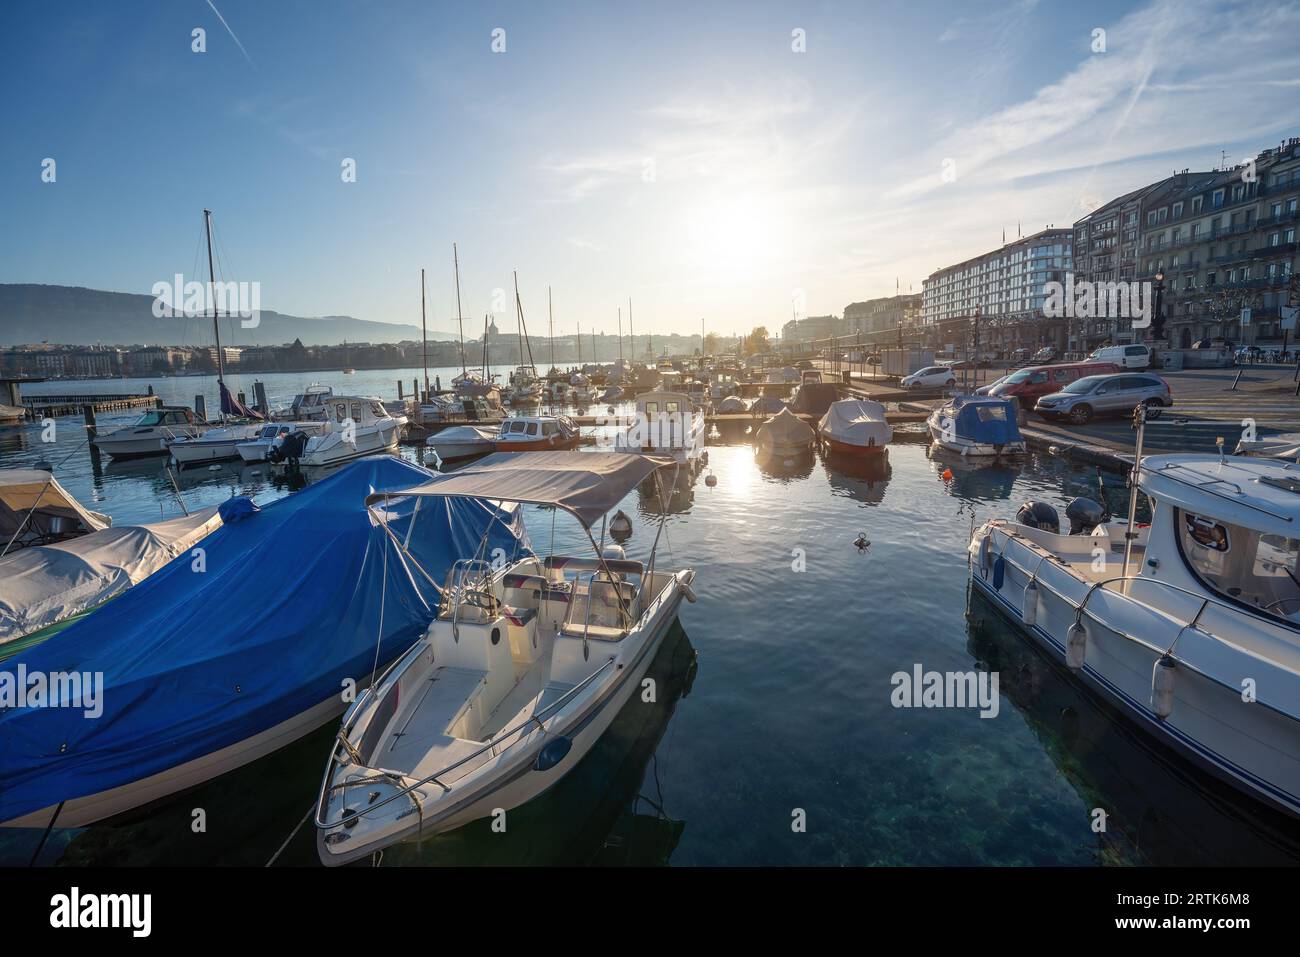 Pier with Boats at Lake Geneva - Geneva, Switzerland Stock Photo